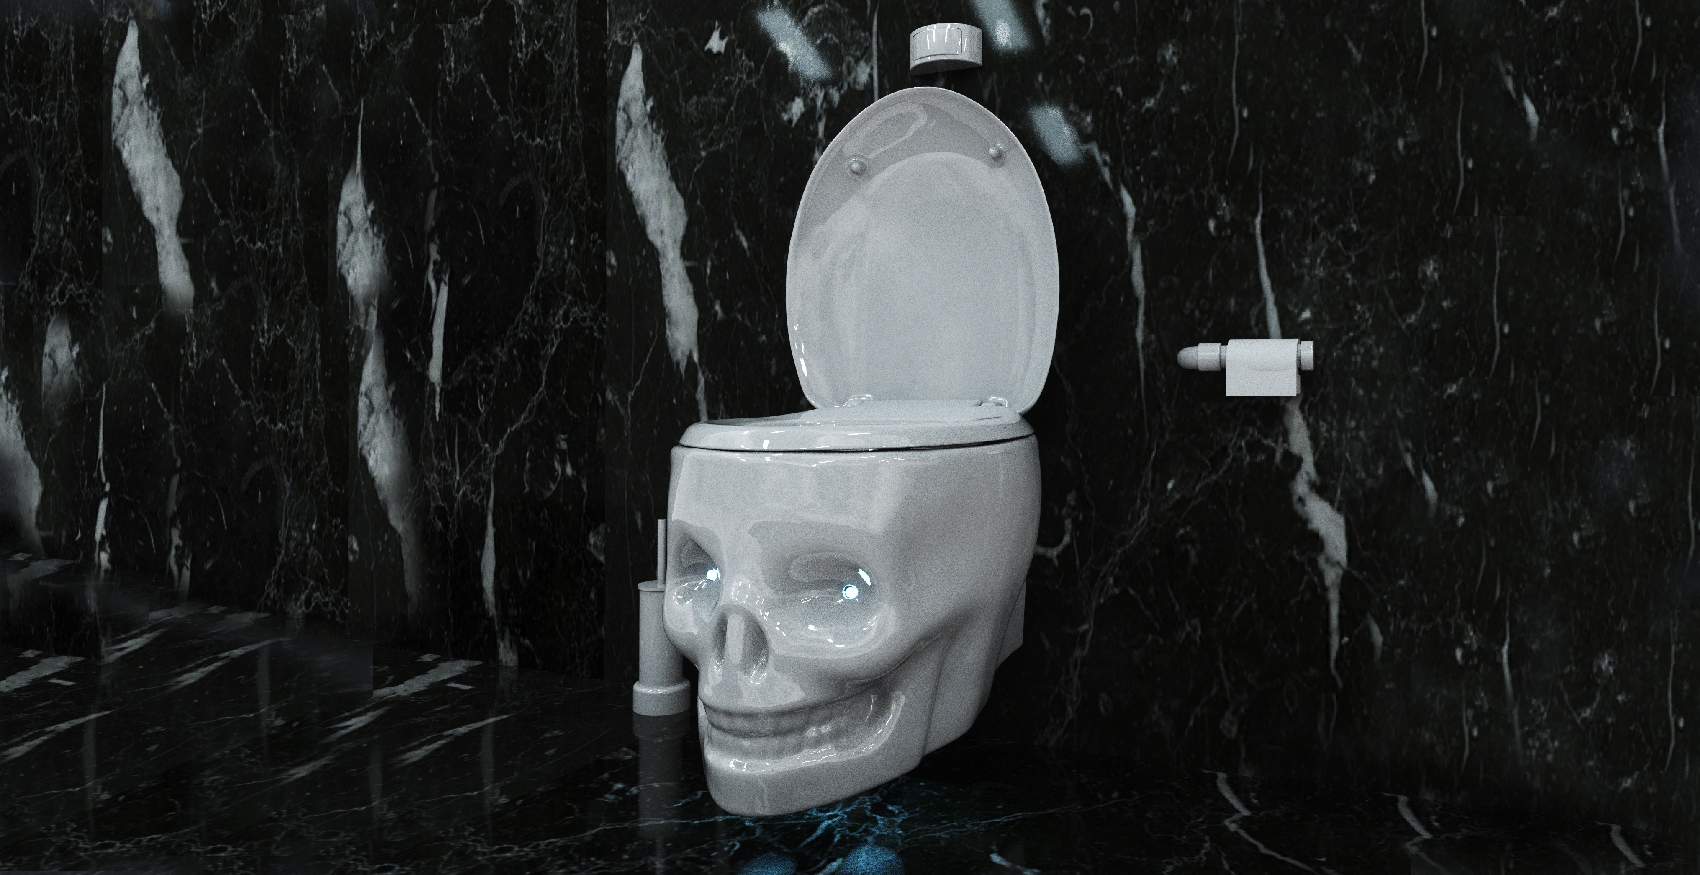 blanc water throne wc tete de mort toilet skull